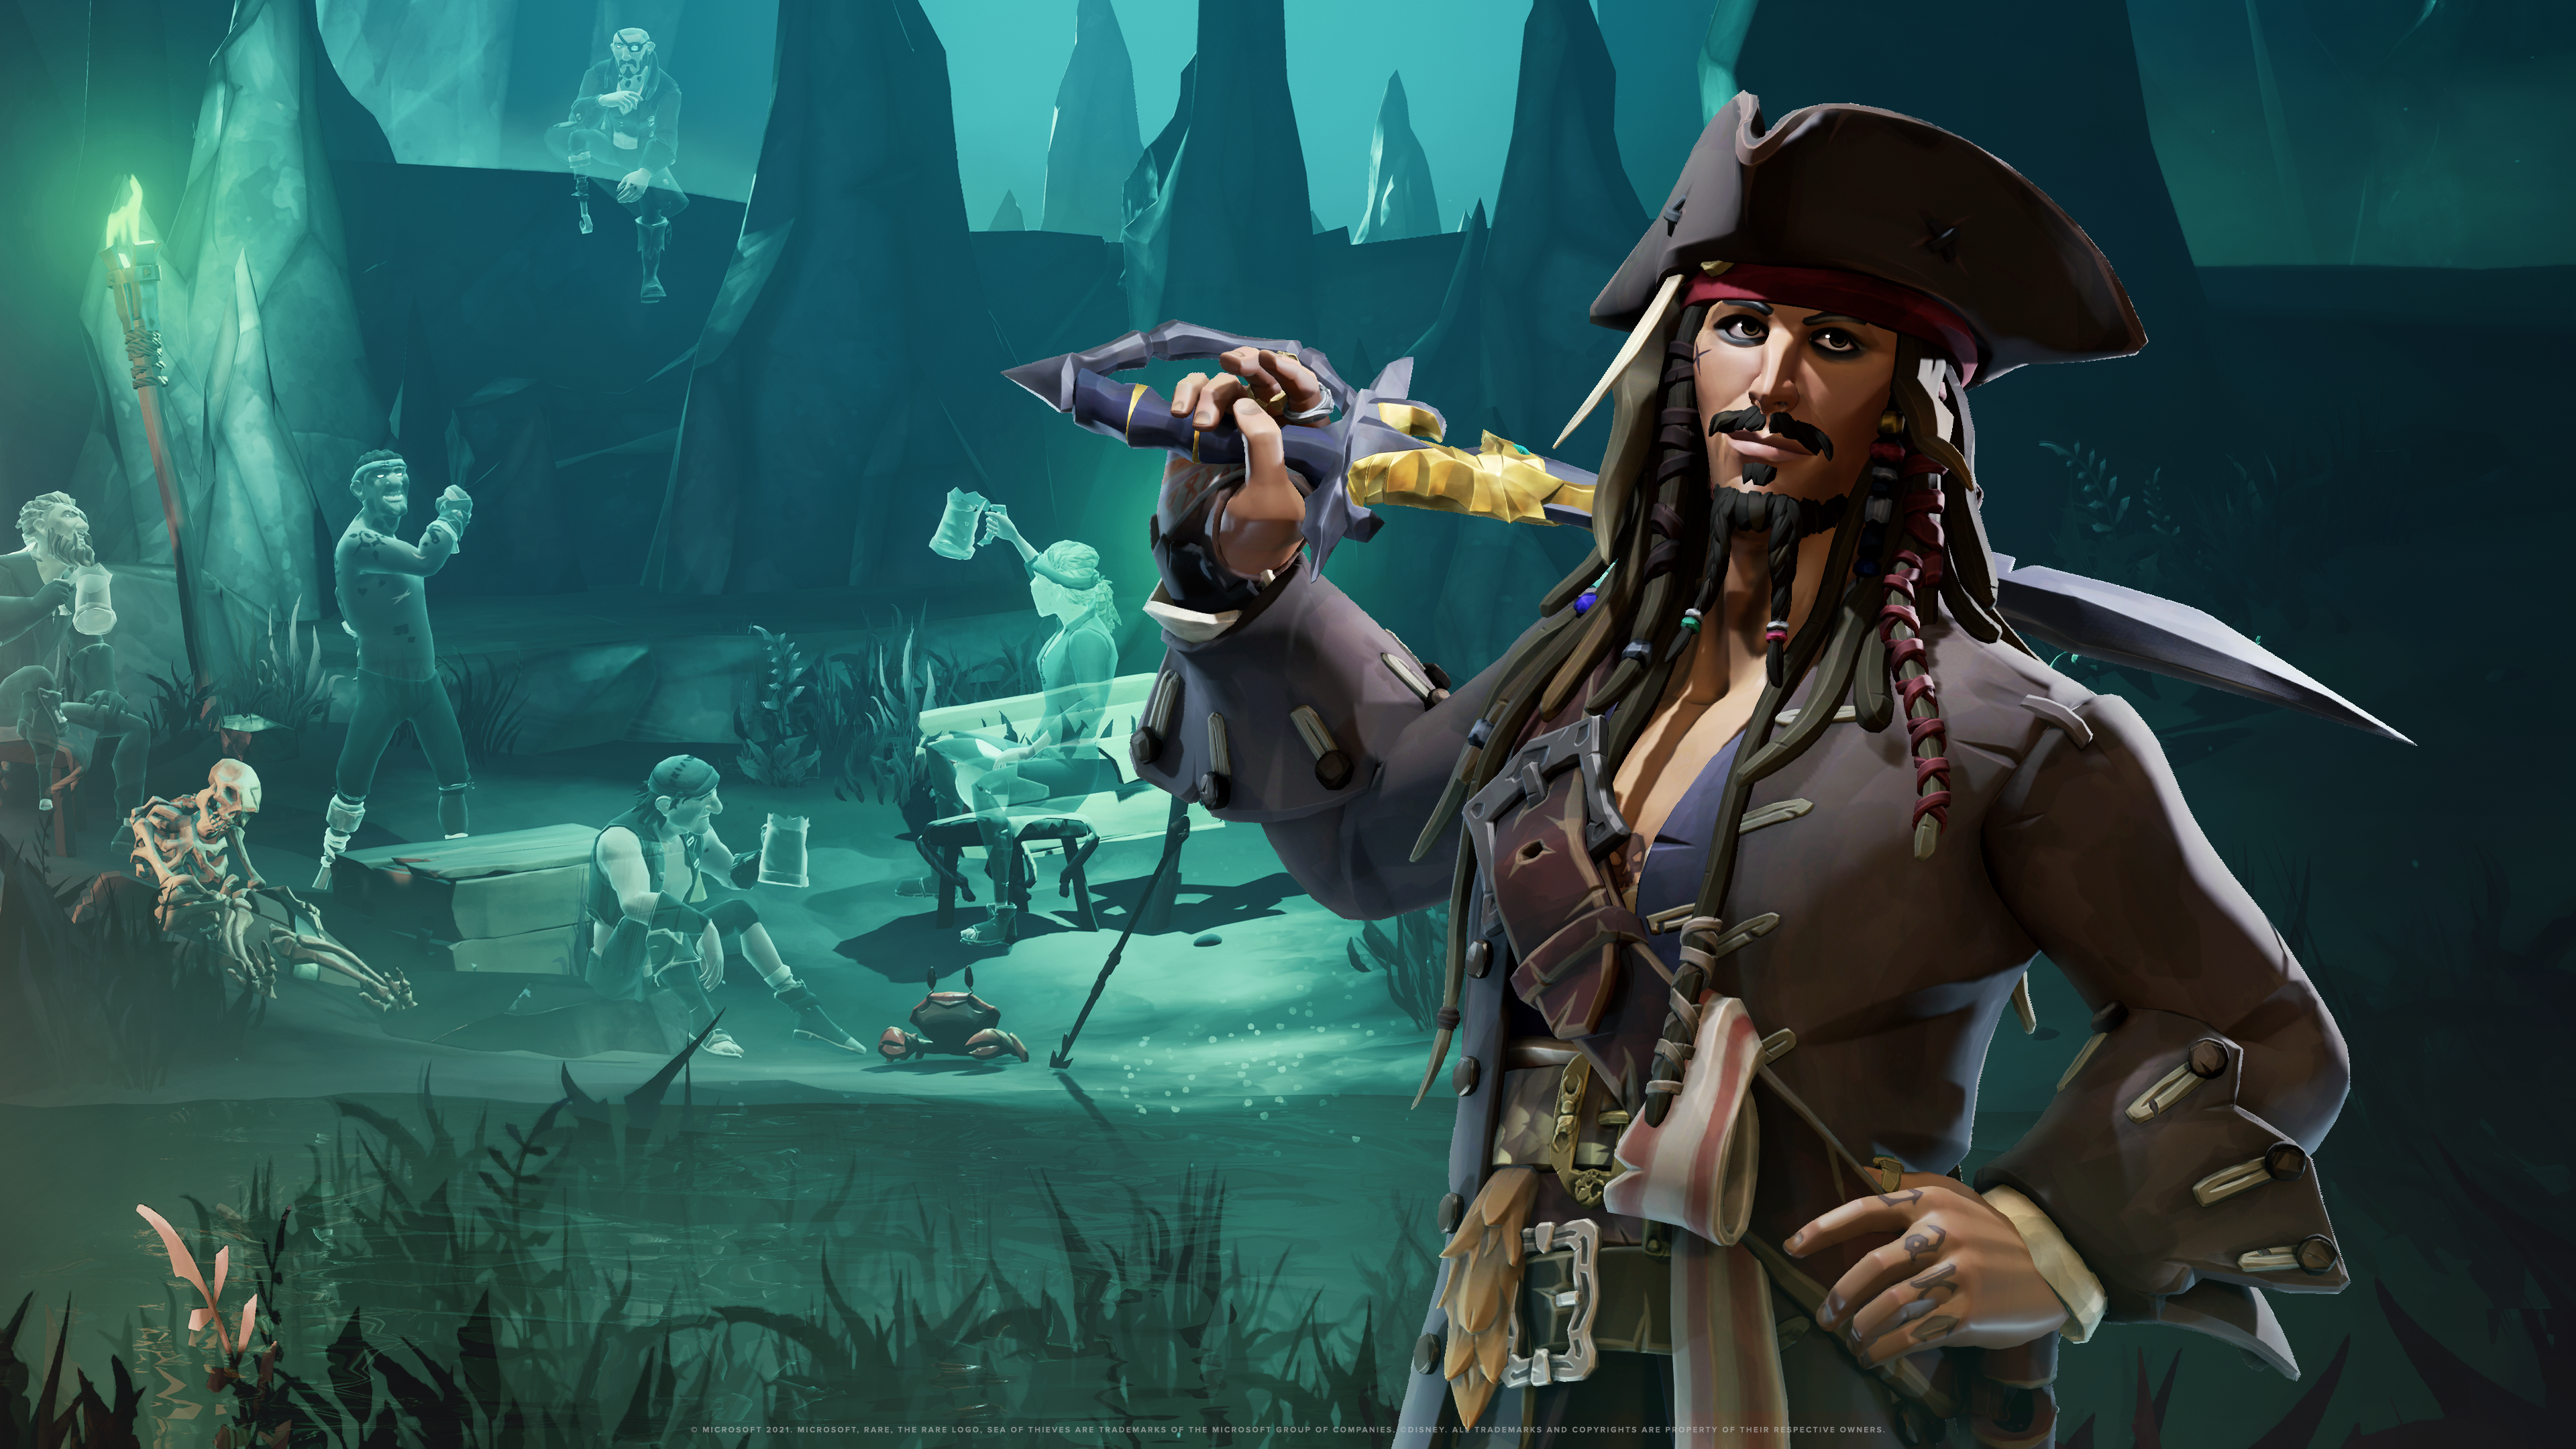 Captain_Jack_Sparrow